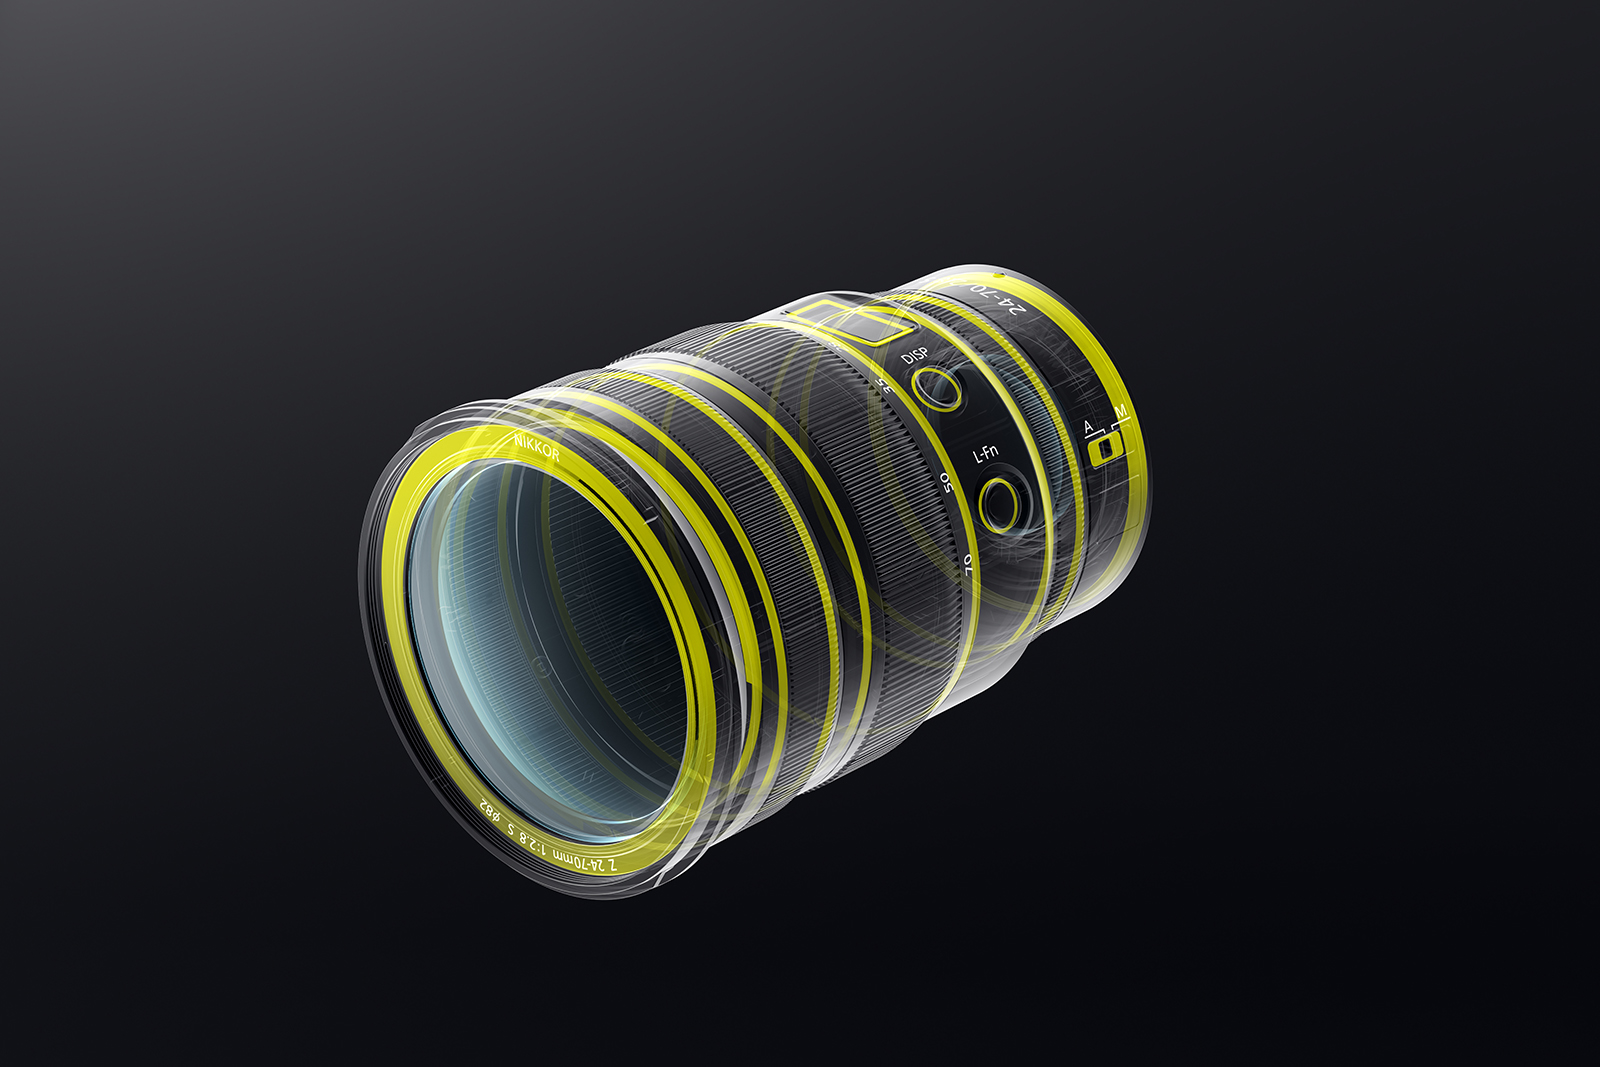 nikon nikkor 24 70mm s lens announced sealing z24 70 2 8